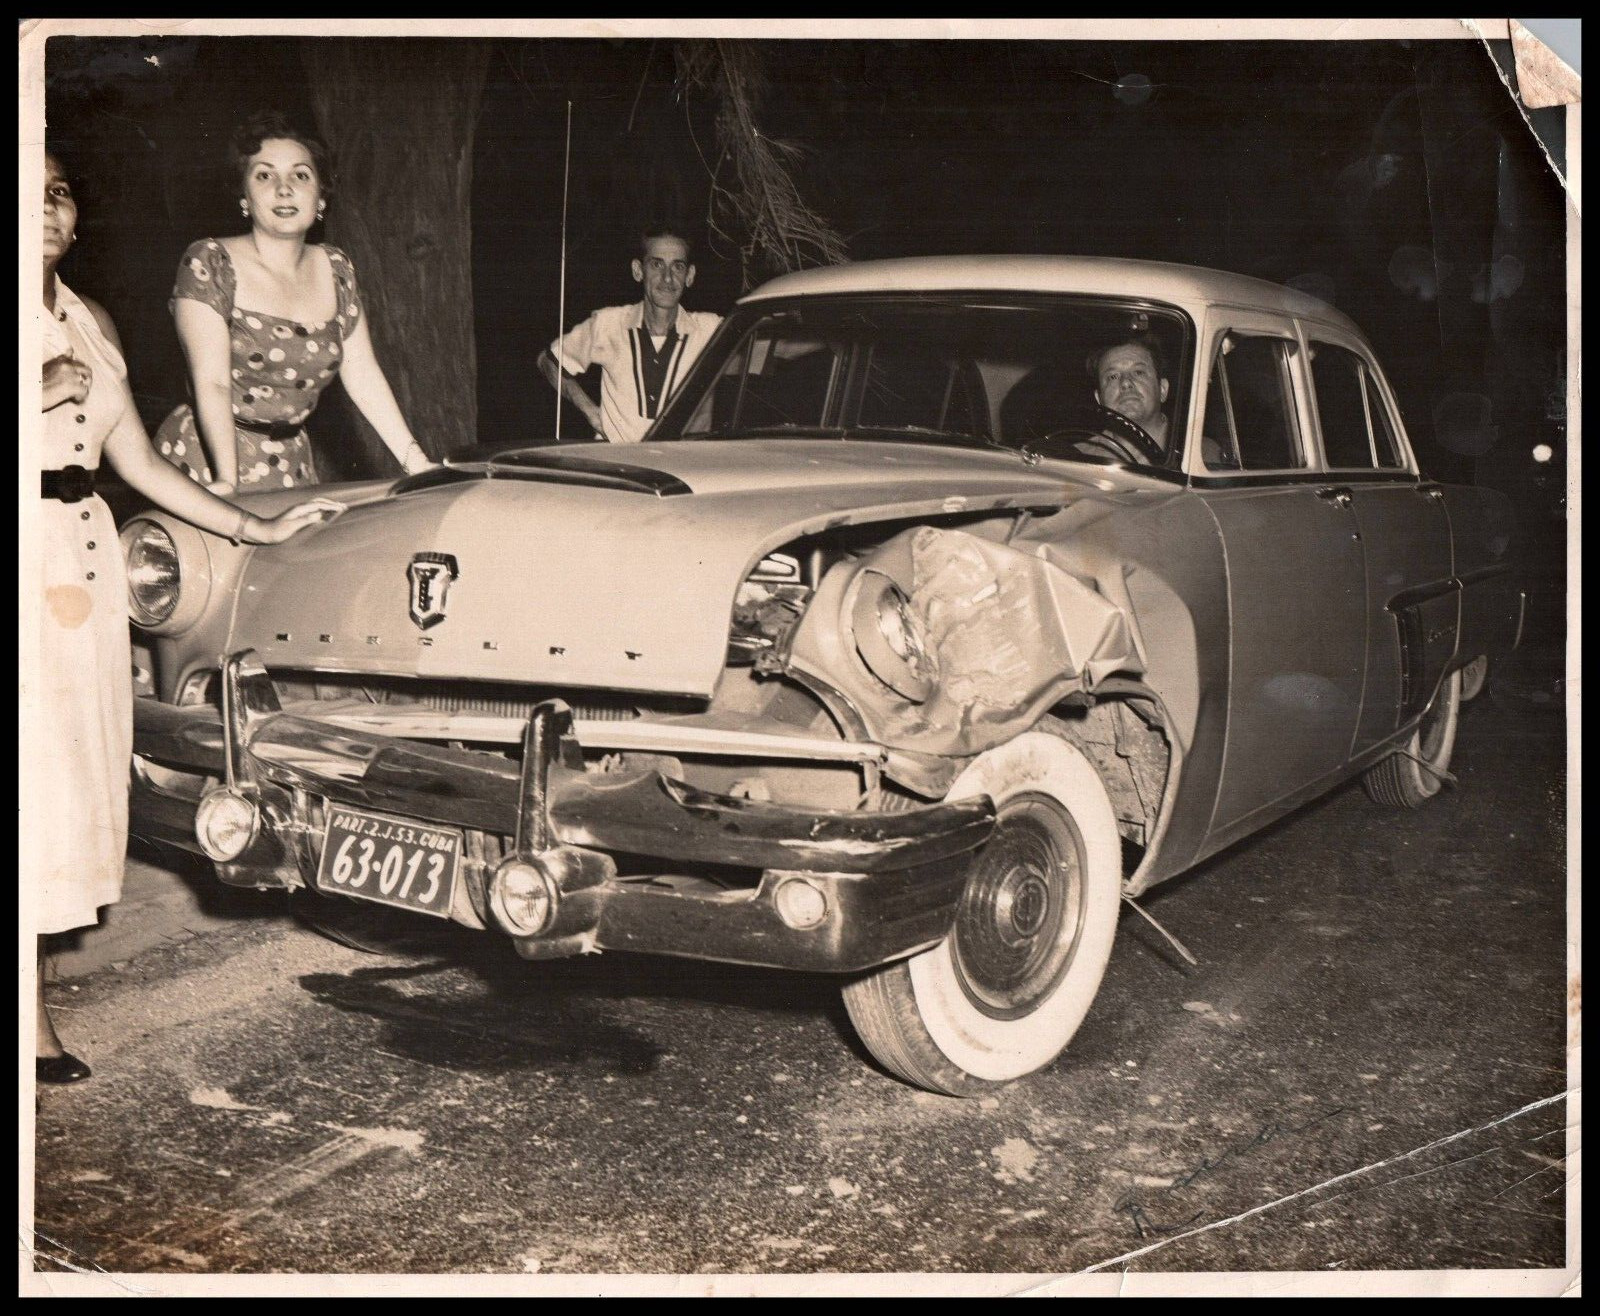 CUBA CUBAN CAR CRASH HAVANA MERCURY AUTOMOBILIA 1953 VINTAGE PHOTO 400